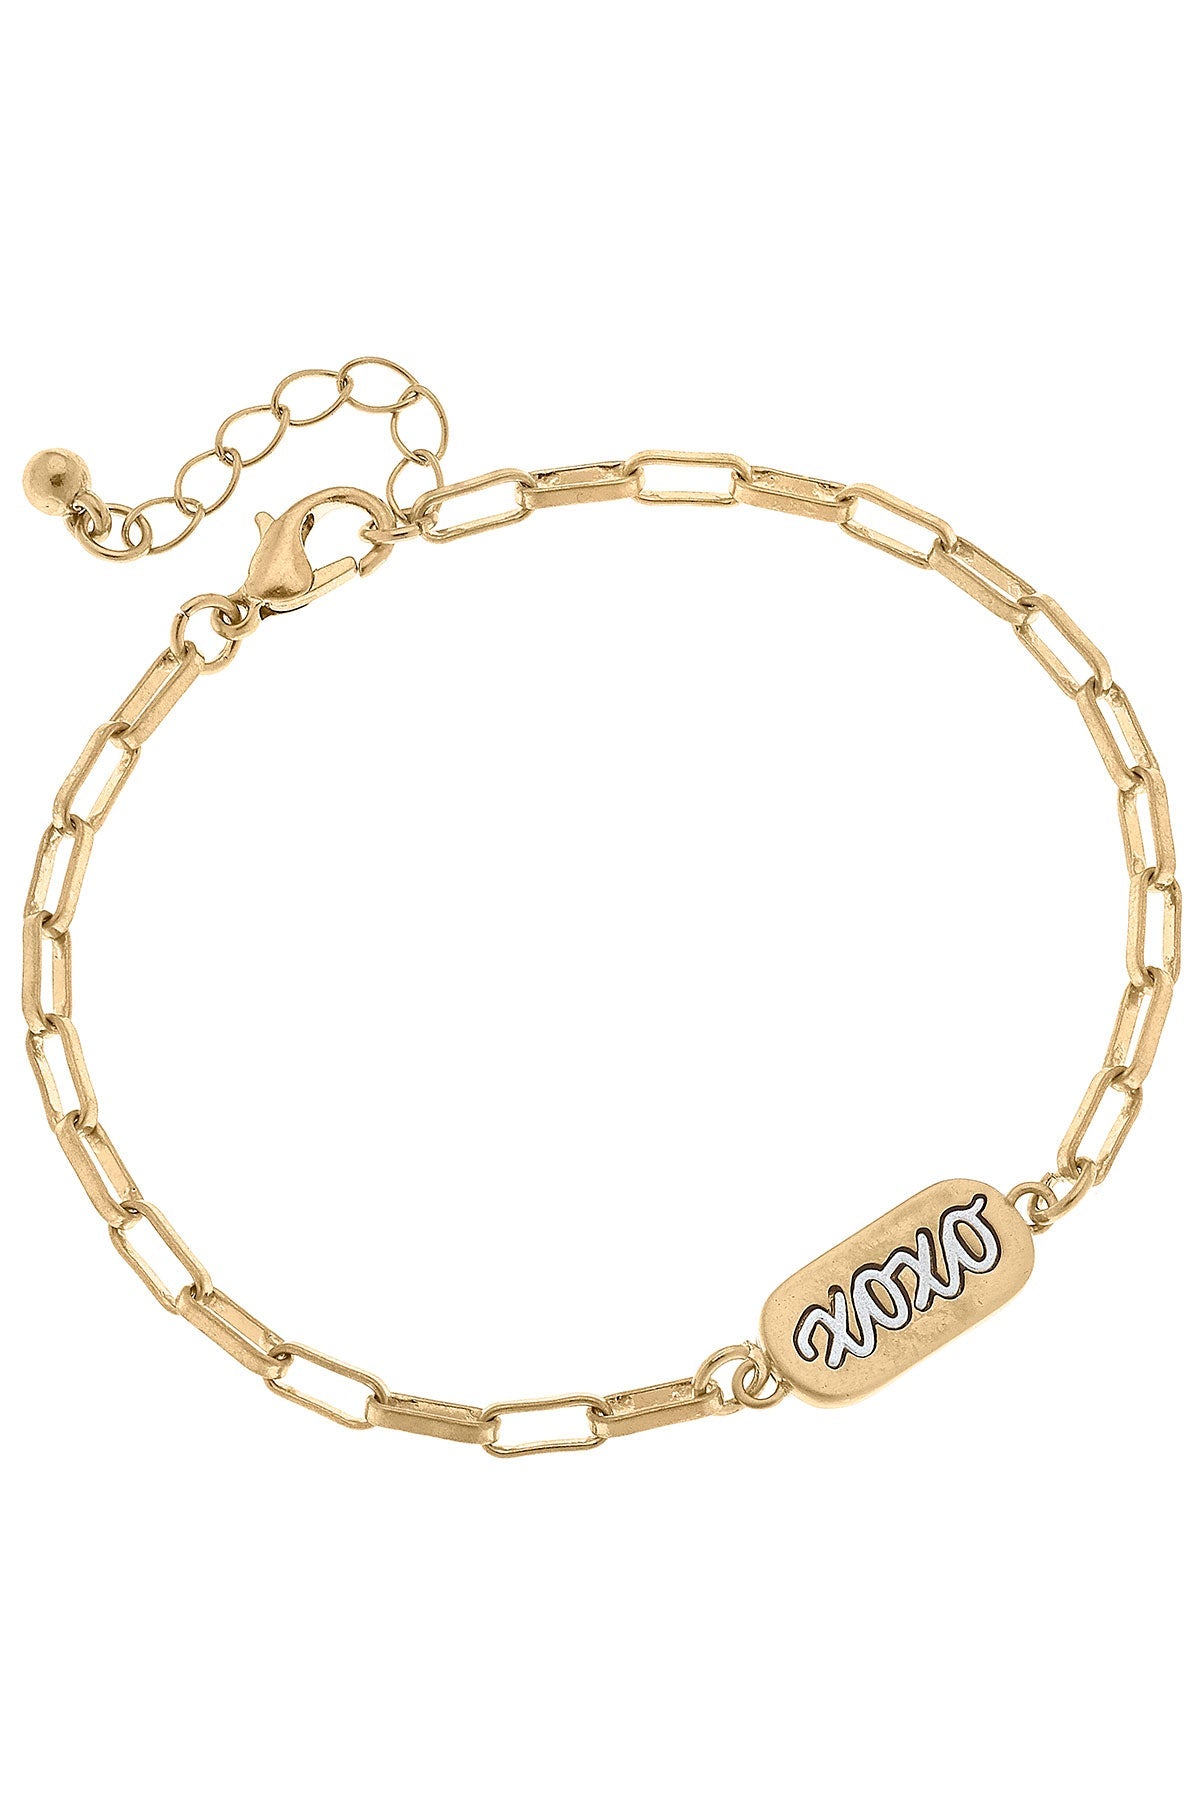 Allison XOXO Chain Bracelet in Worn Gold by CANVAS